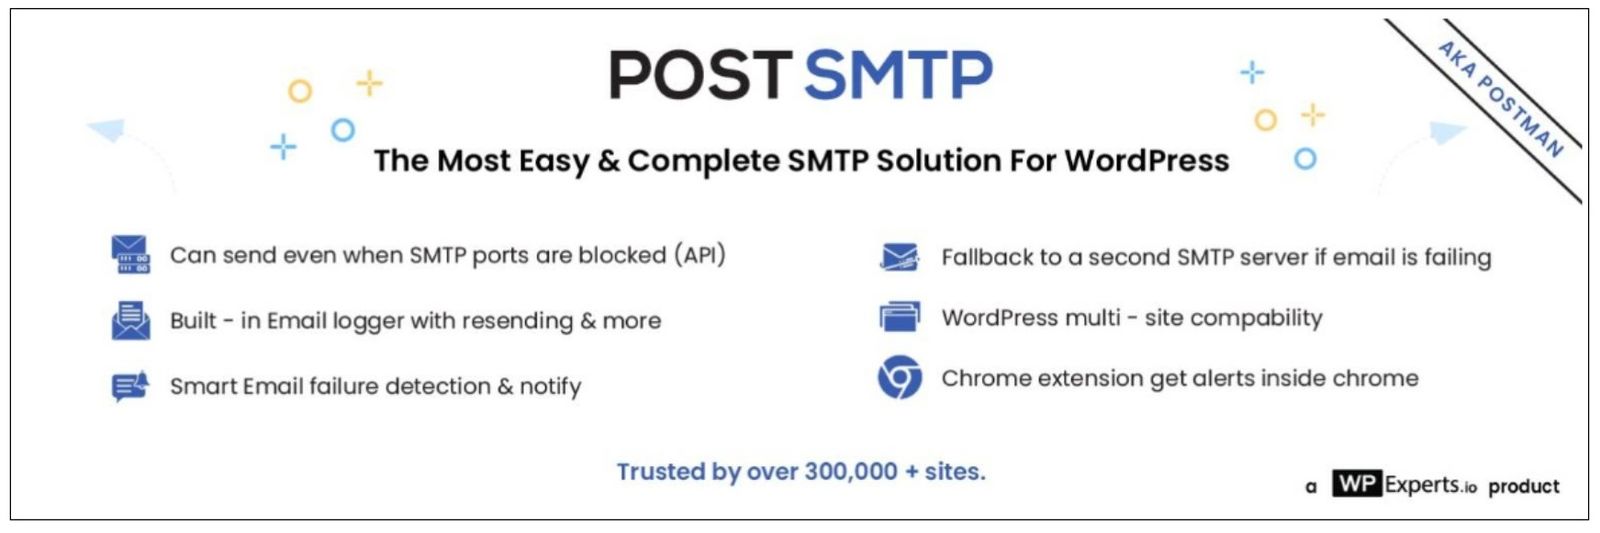 Plugin SMTP WordPress post smtp